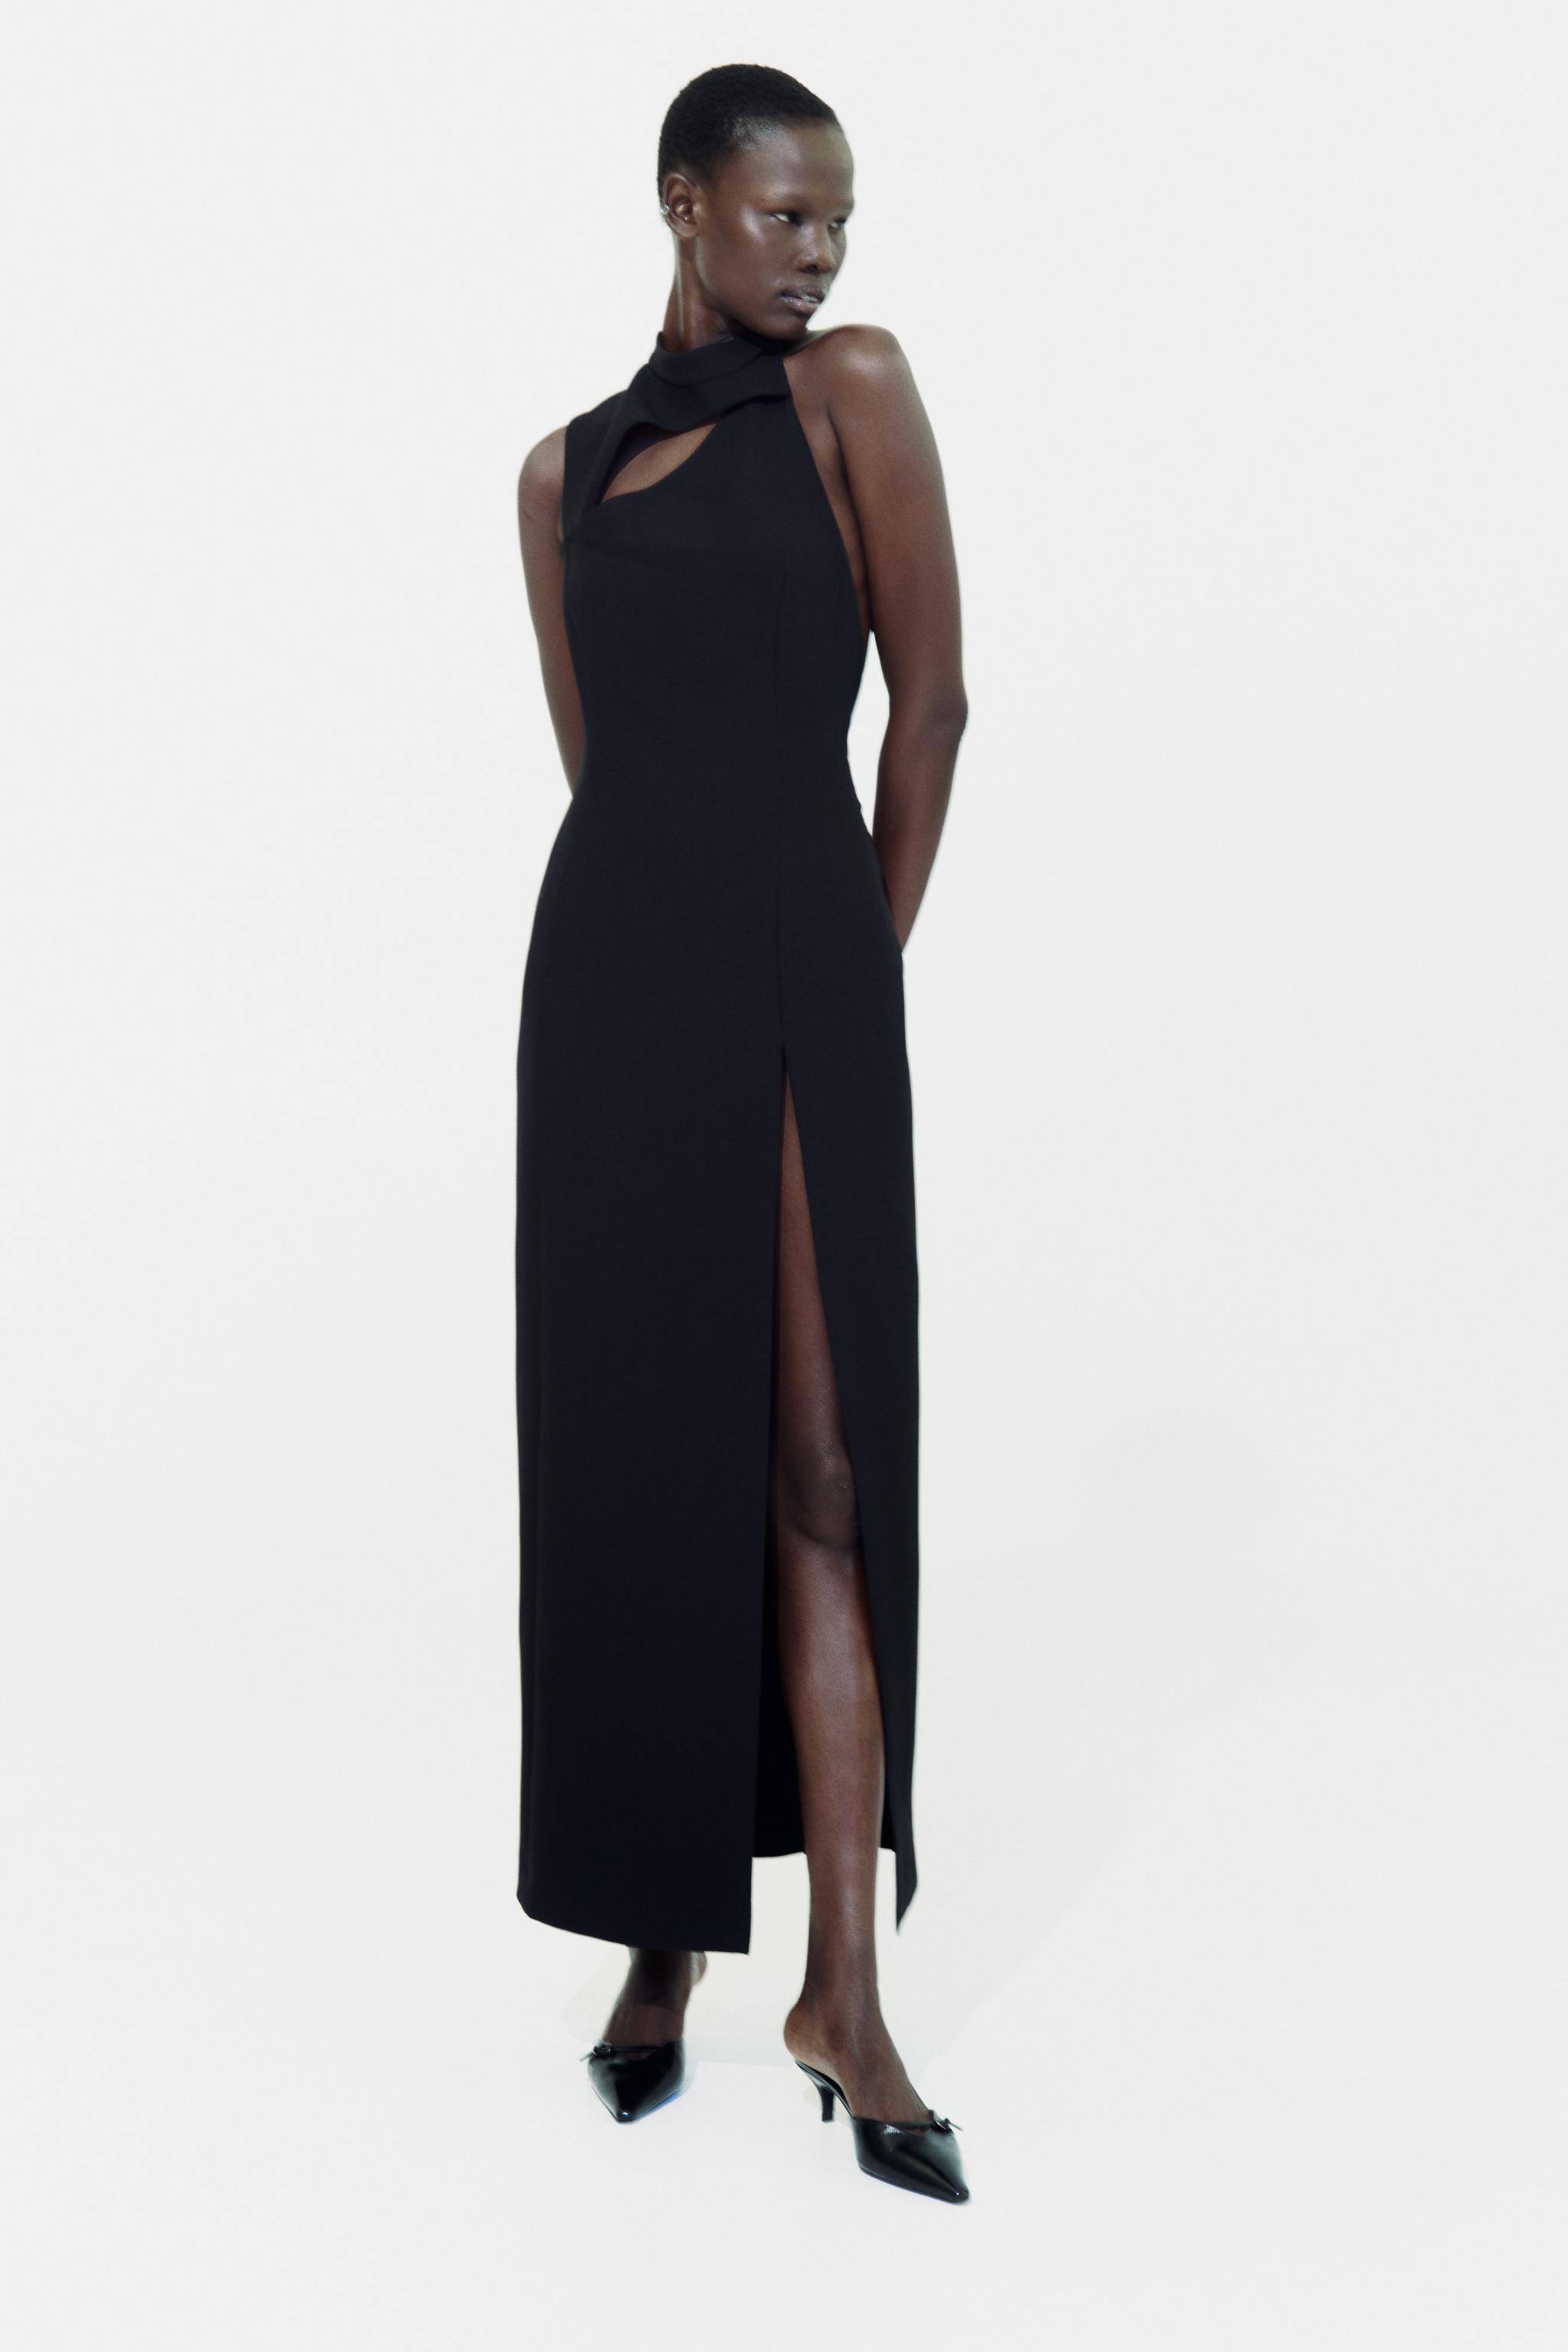 Zara Floral Print Dress for Summer | CloudMom